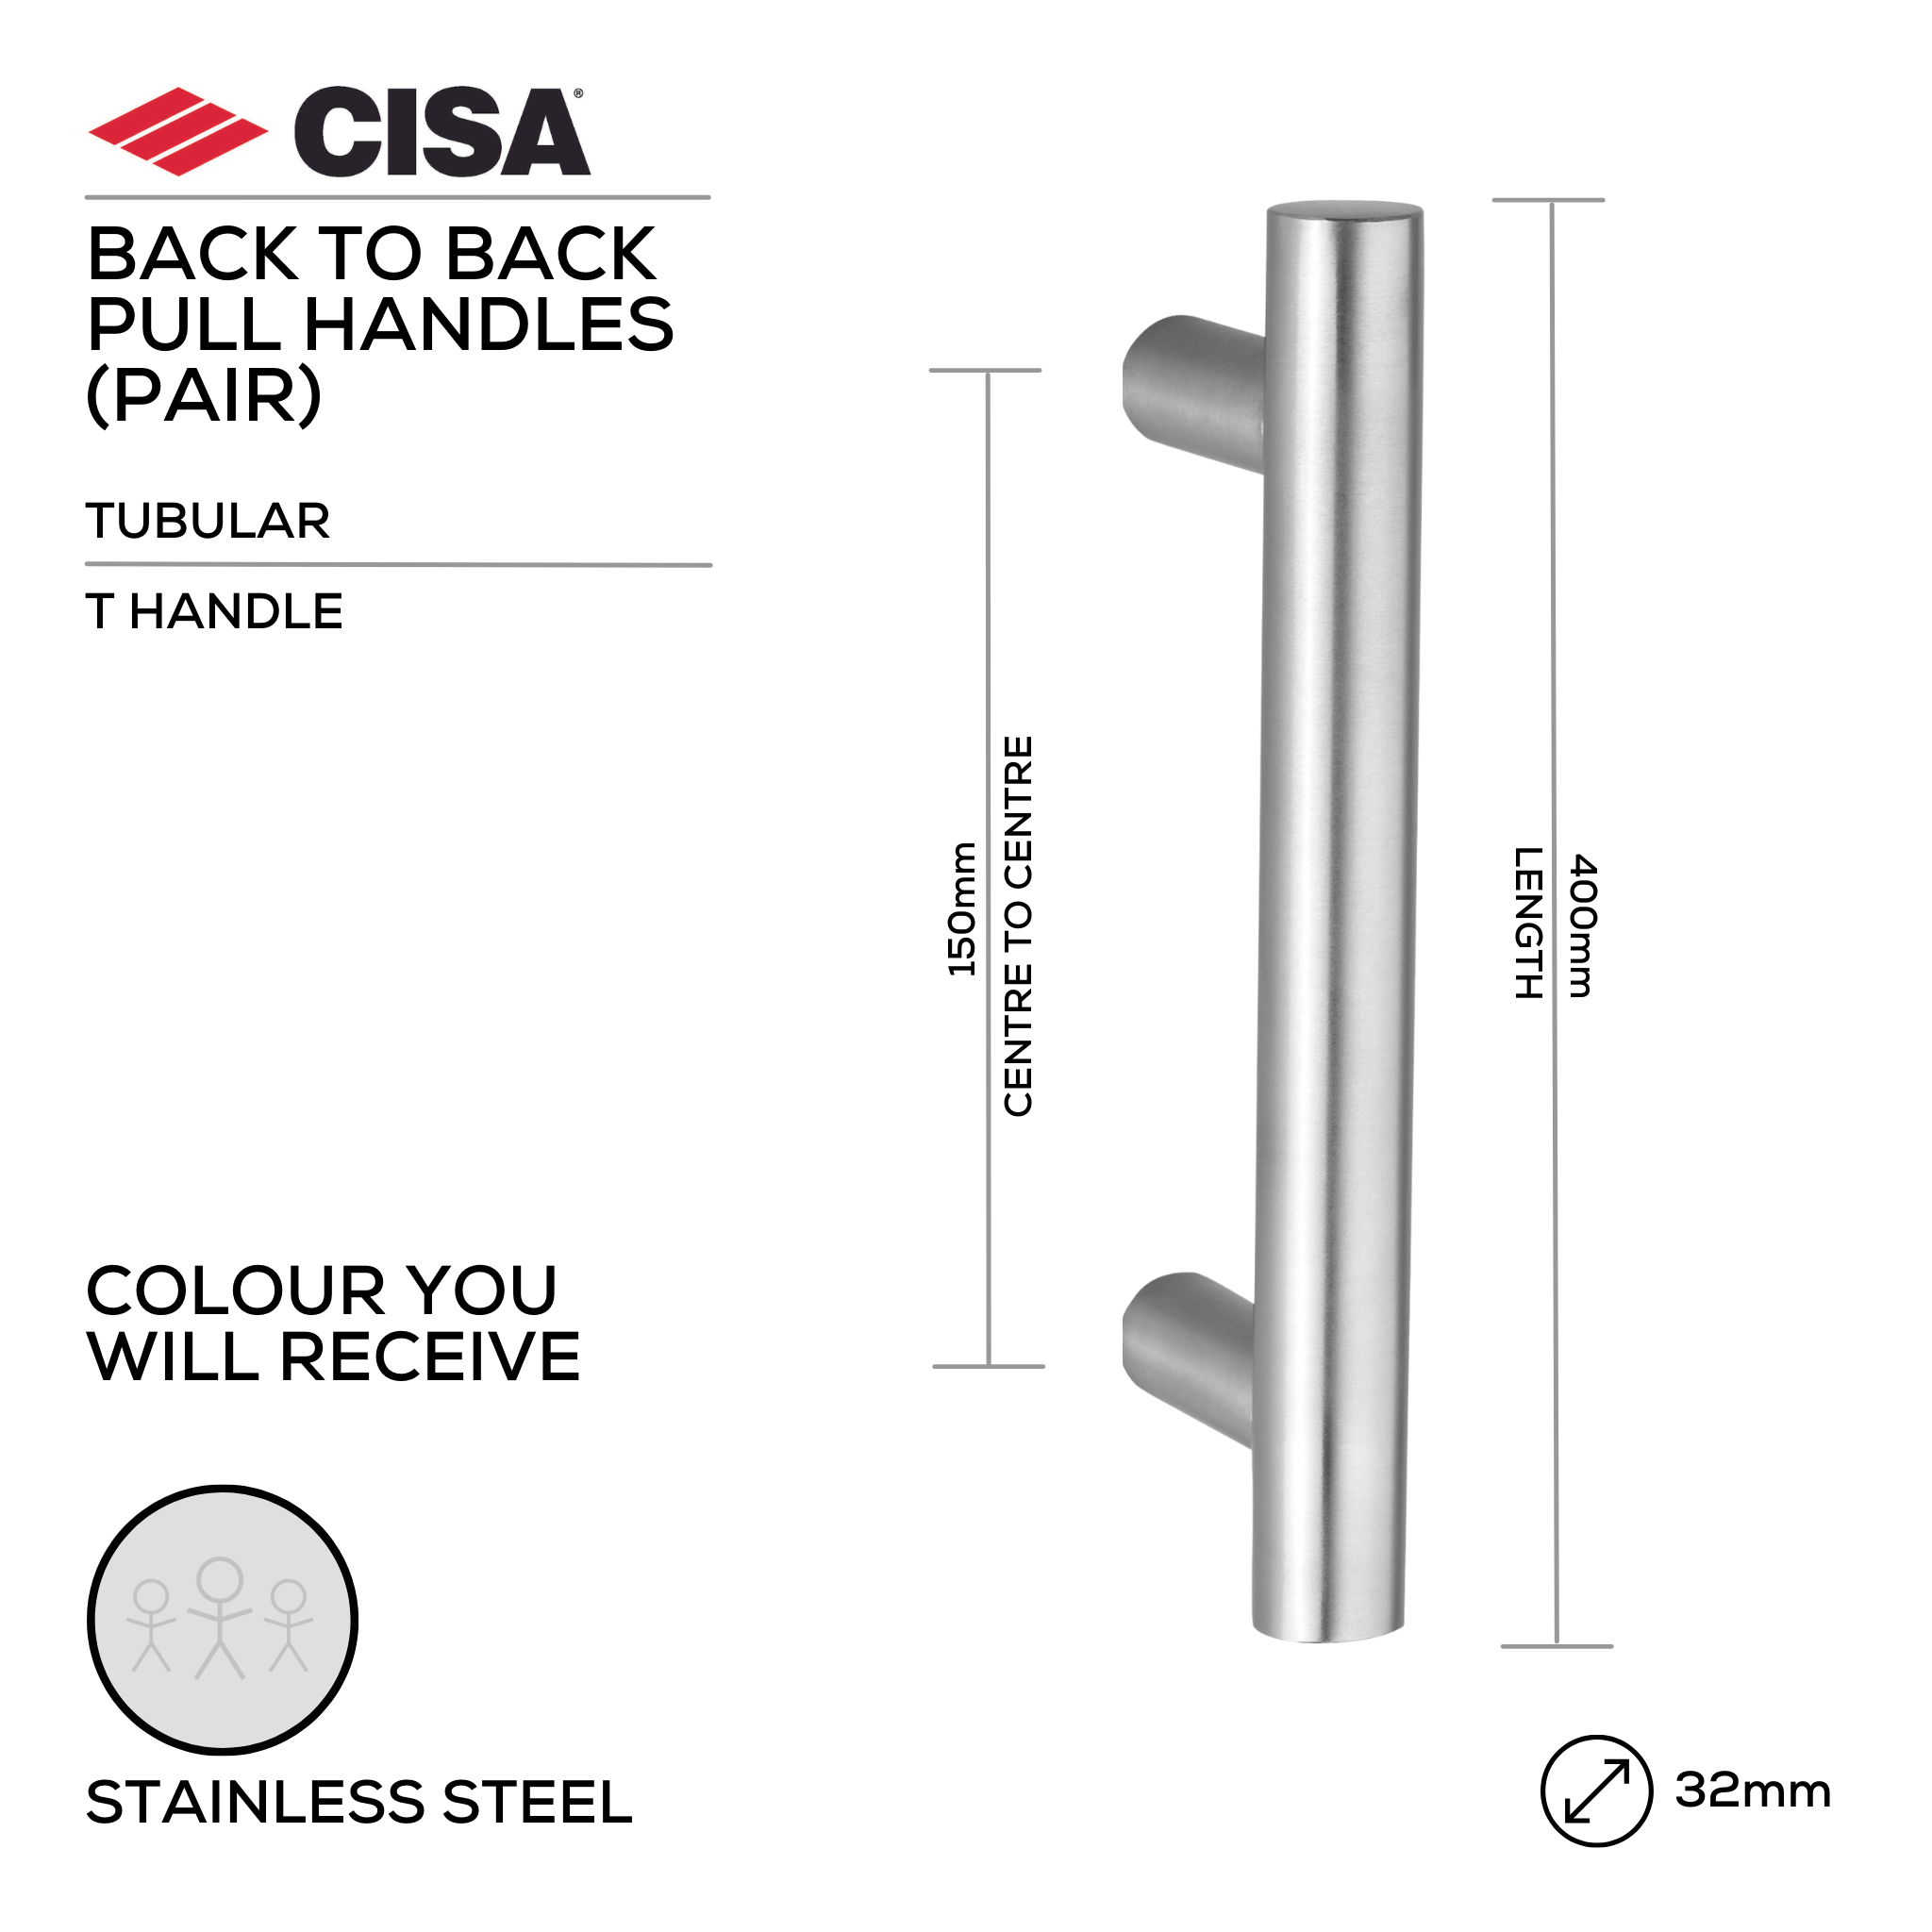 FP.T113.BB.SS, Pull Handle, Tubular, T Handle, BTB, 32mm (Ø) x 400mm (l) x 150mm (ctc), Stainless Steel, CISA